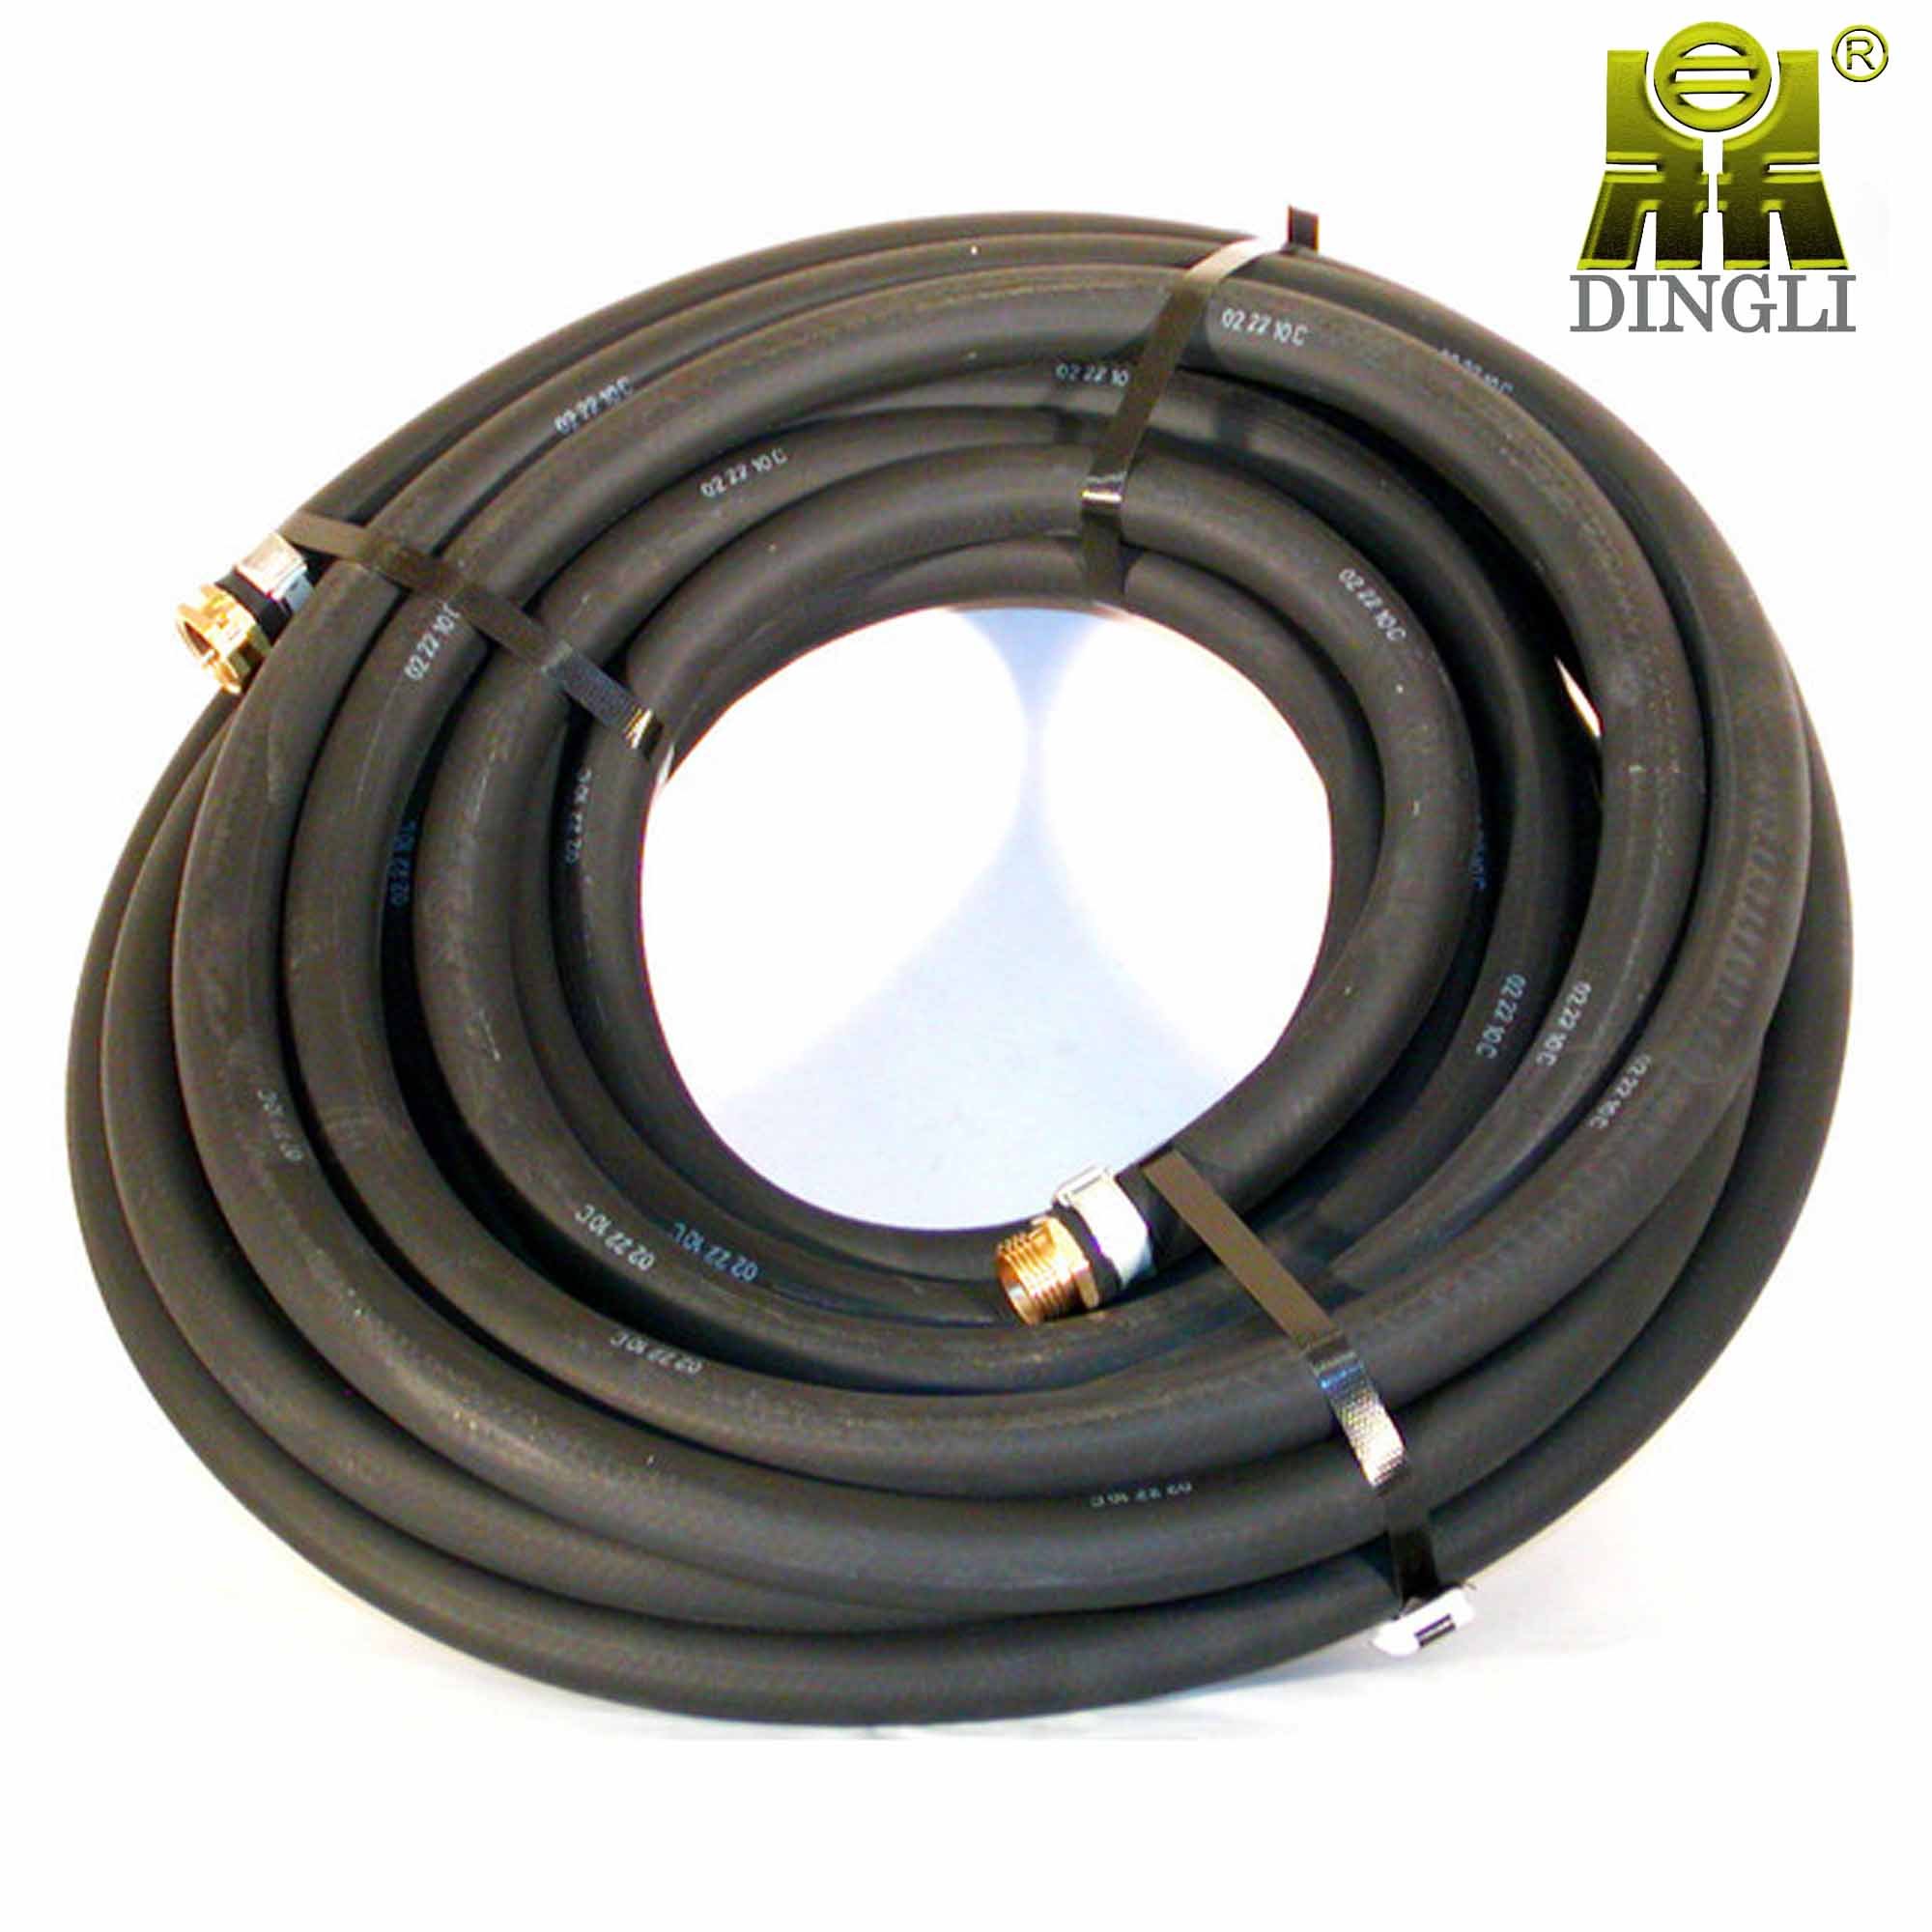 dingli Acetylene rubber hose 100 meter length